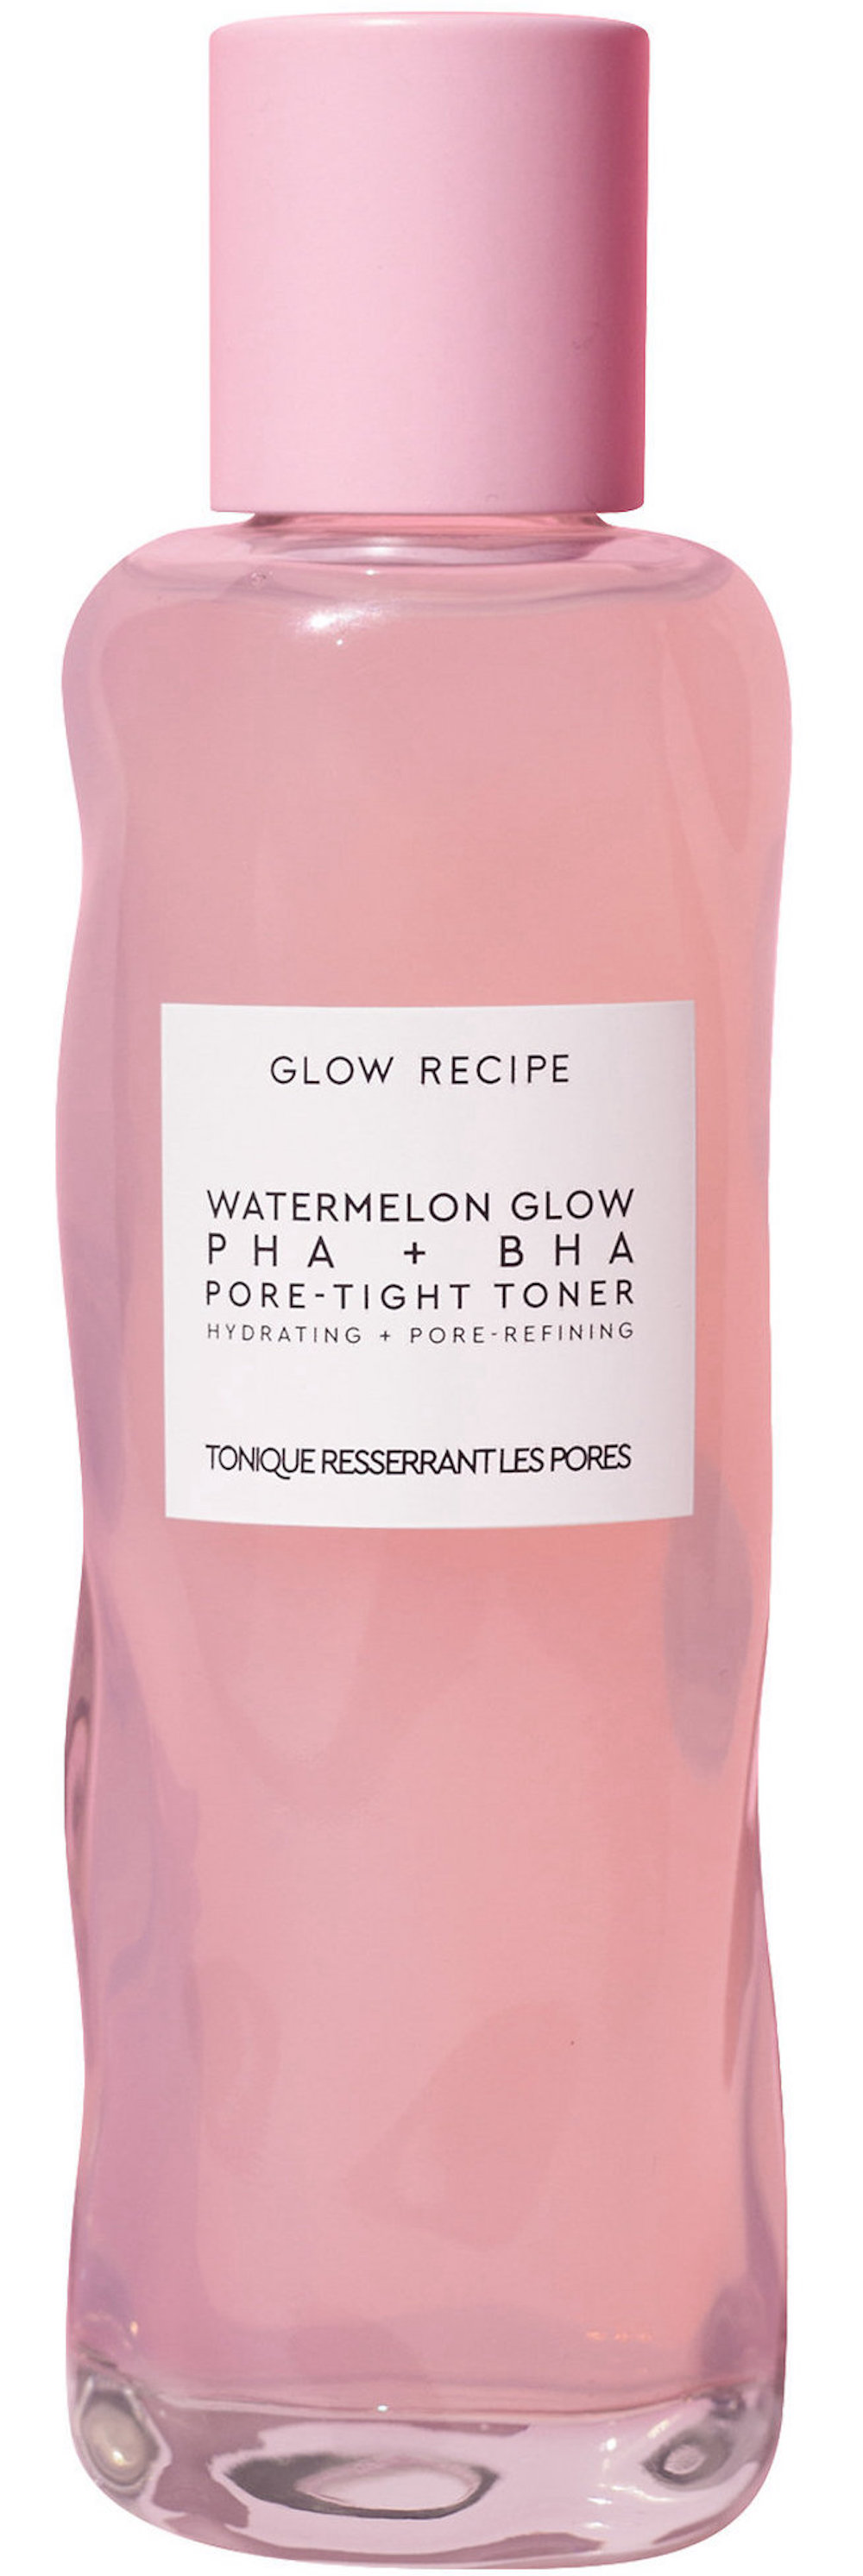 Glow recipe watermelon toner